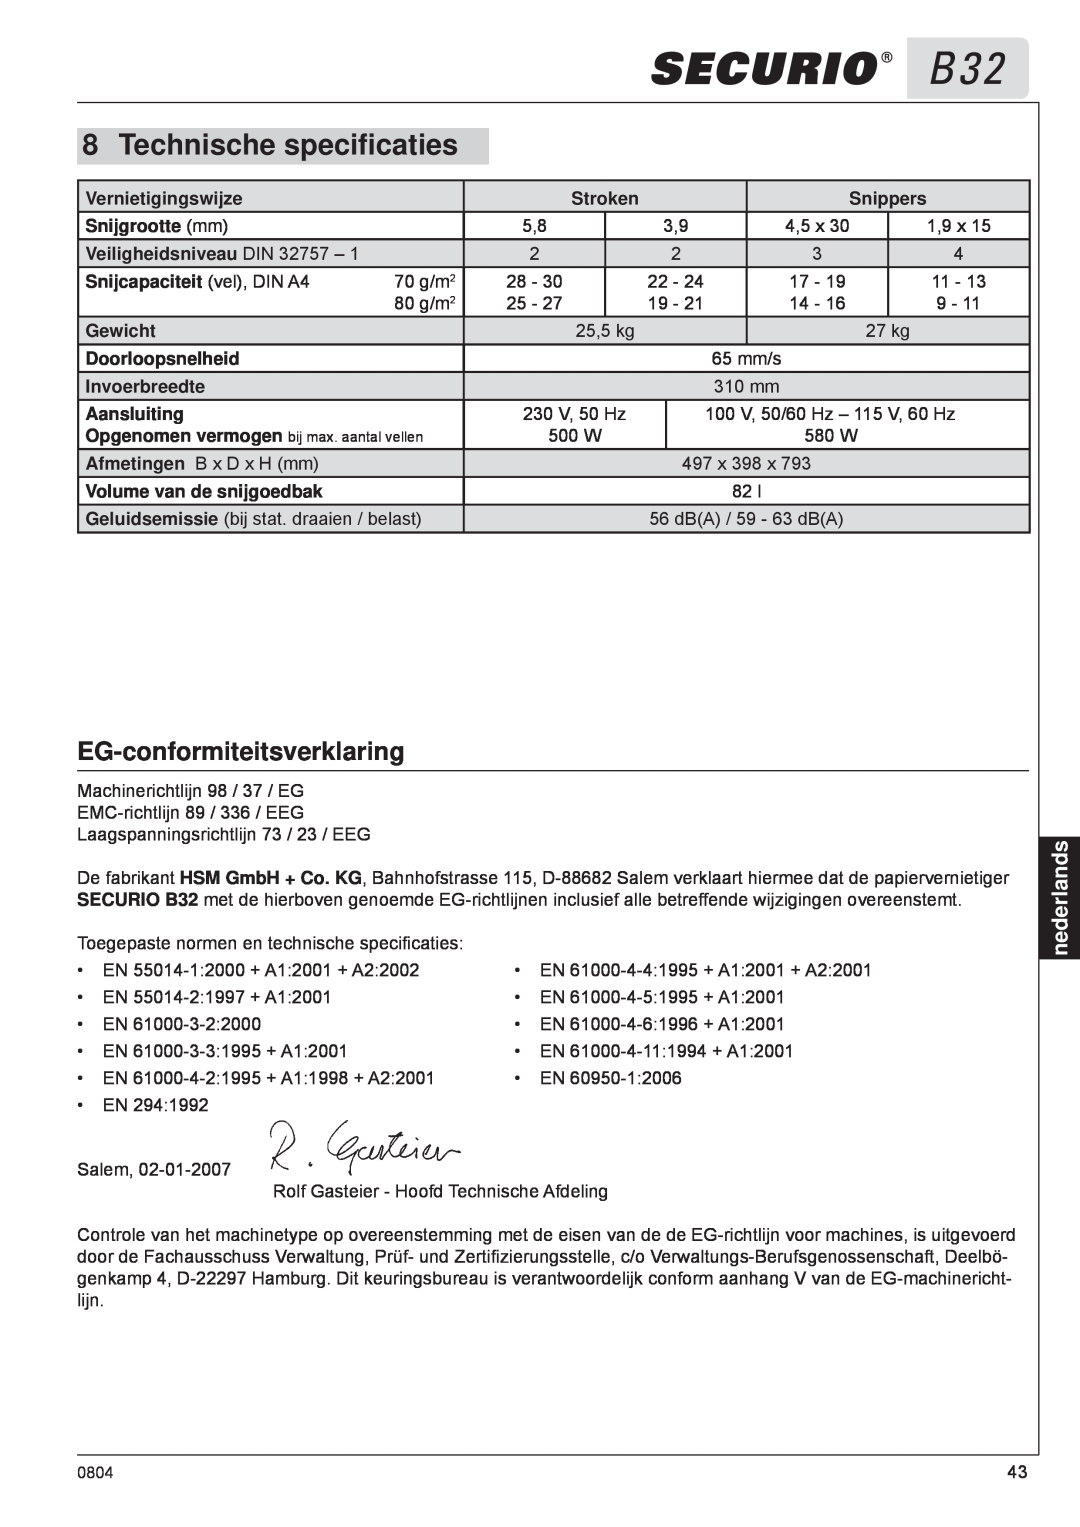 HSM B32 manual Technische speciﬁcaties, EG-conformiteitsverklaring, nederlands 